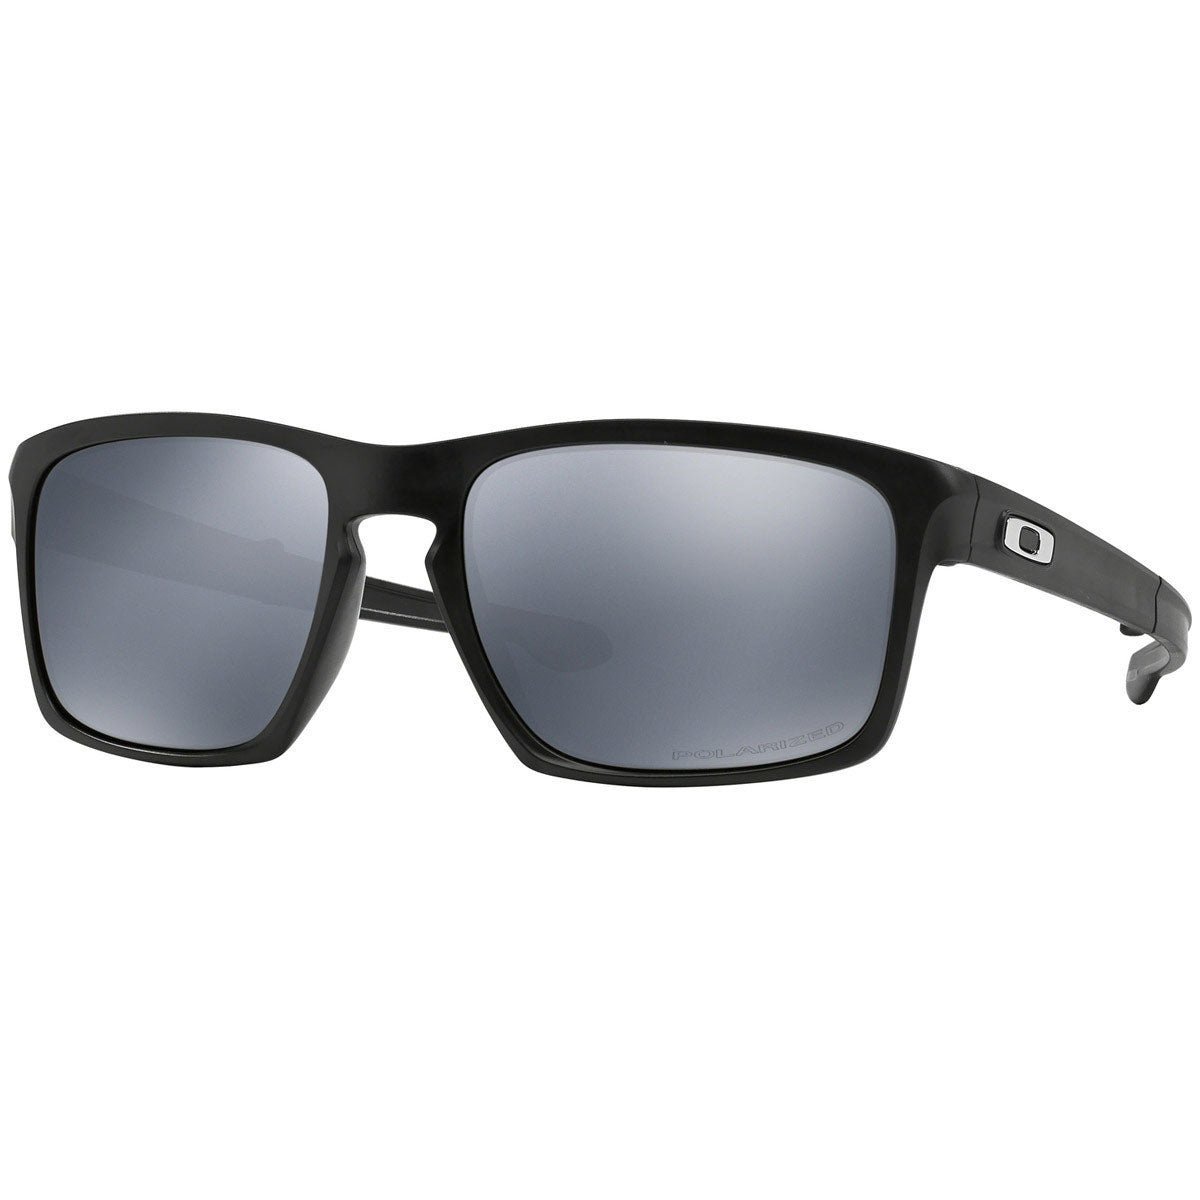 Oakley Sliver Foldable Sunglasses - Matte Black / Black Iridium Polarized Lens - OO9246-04